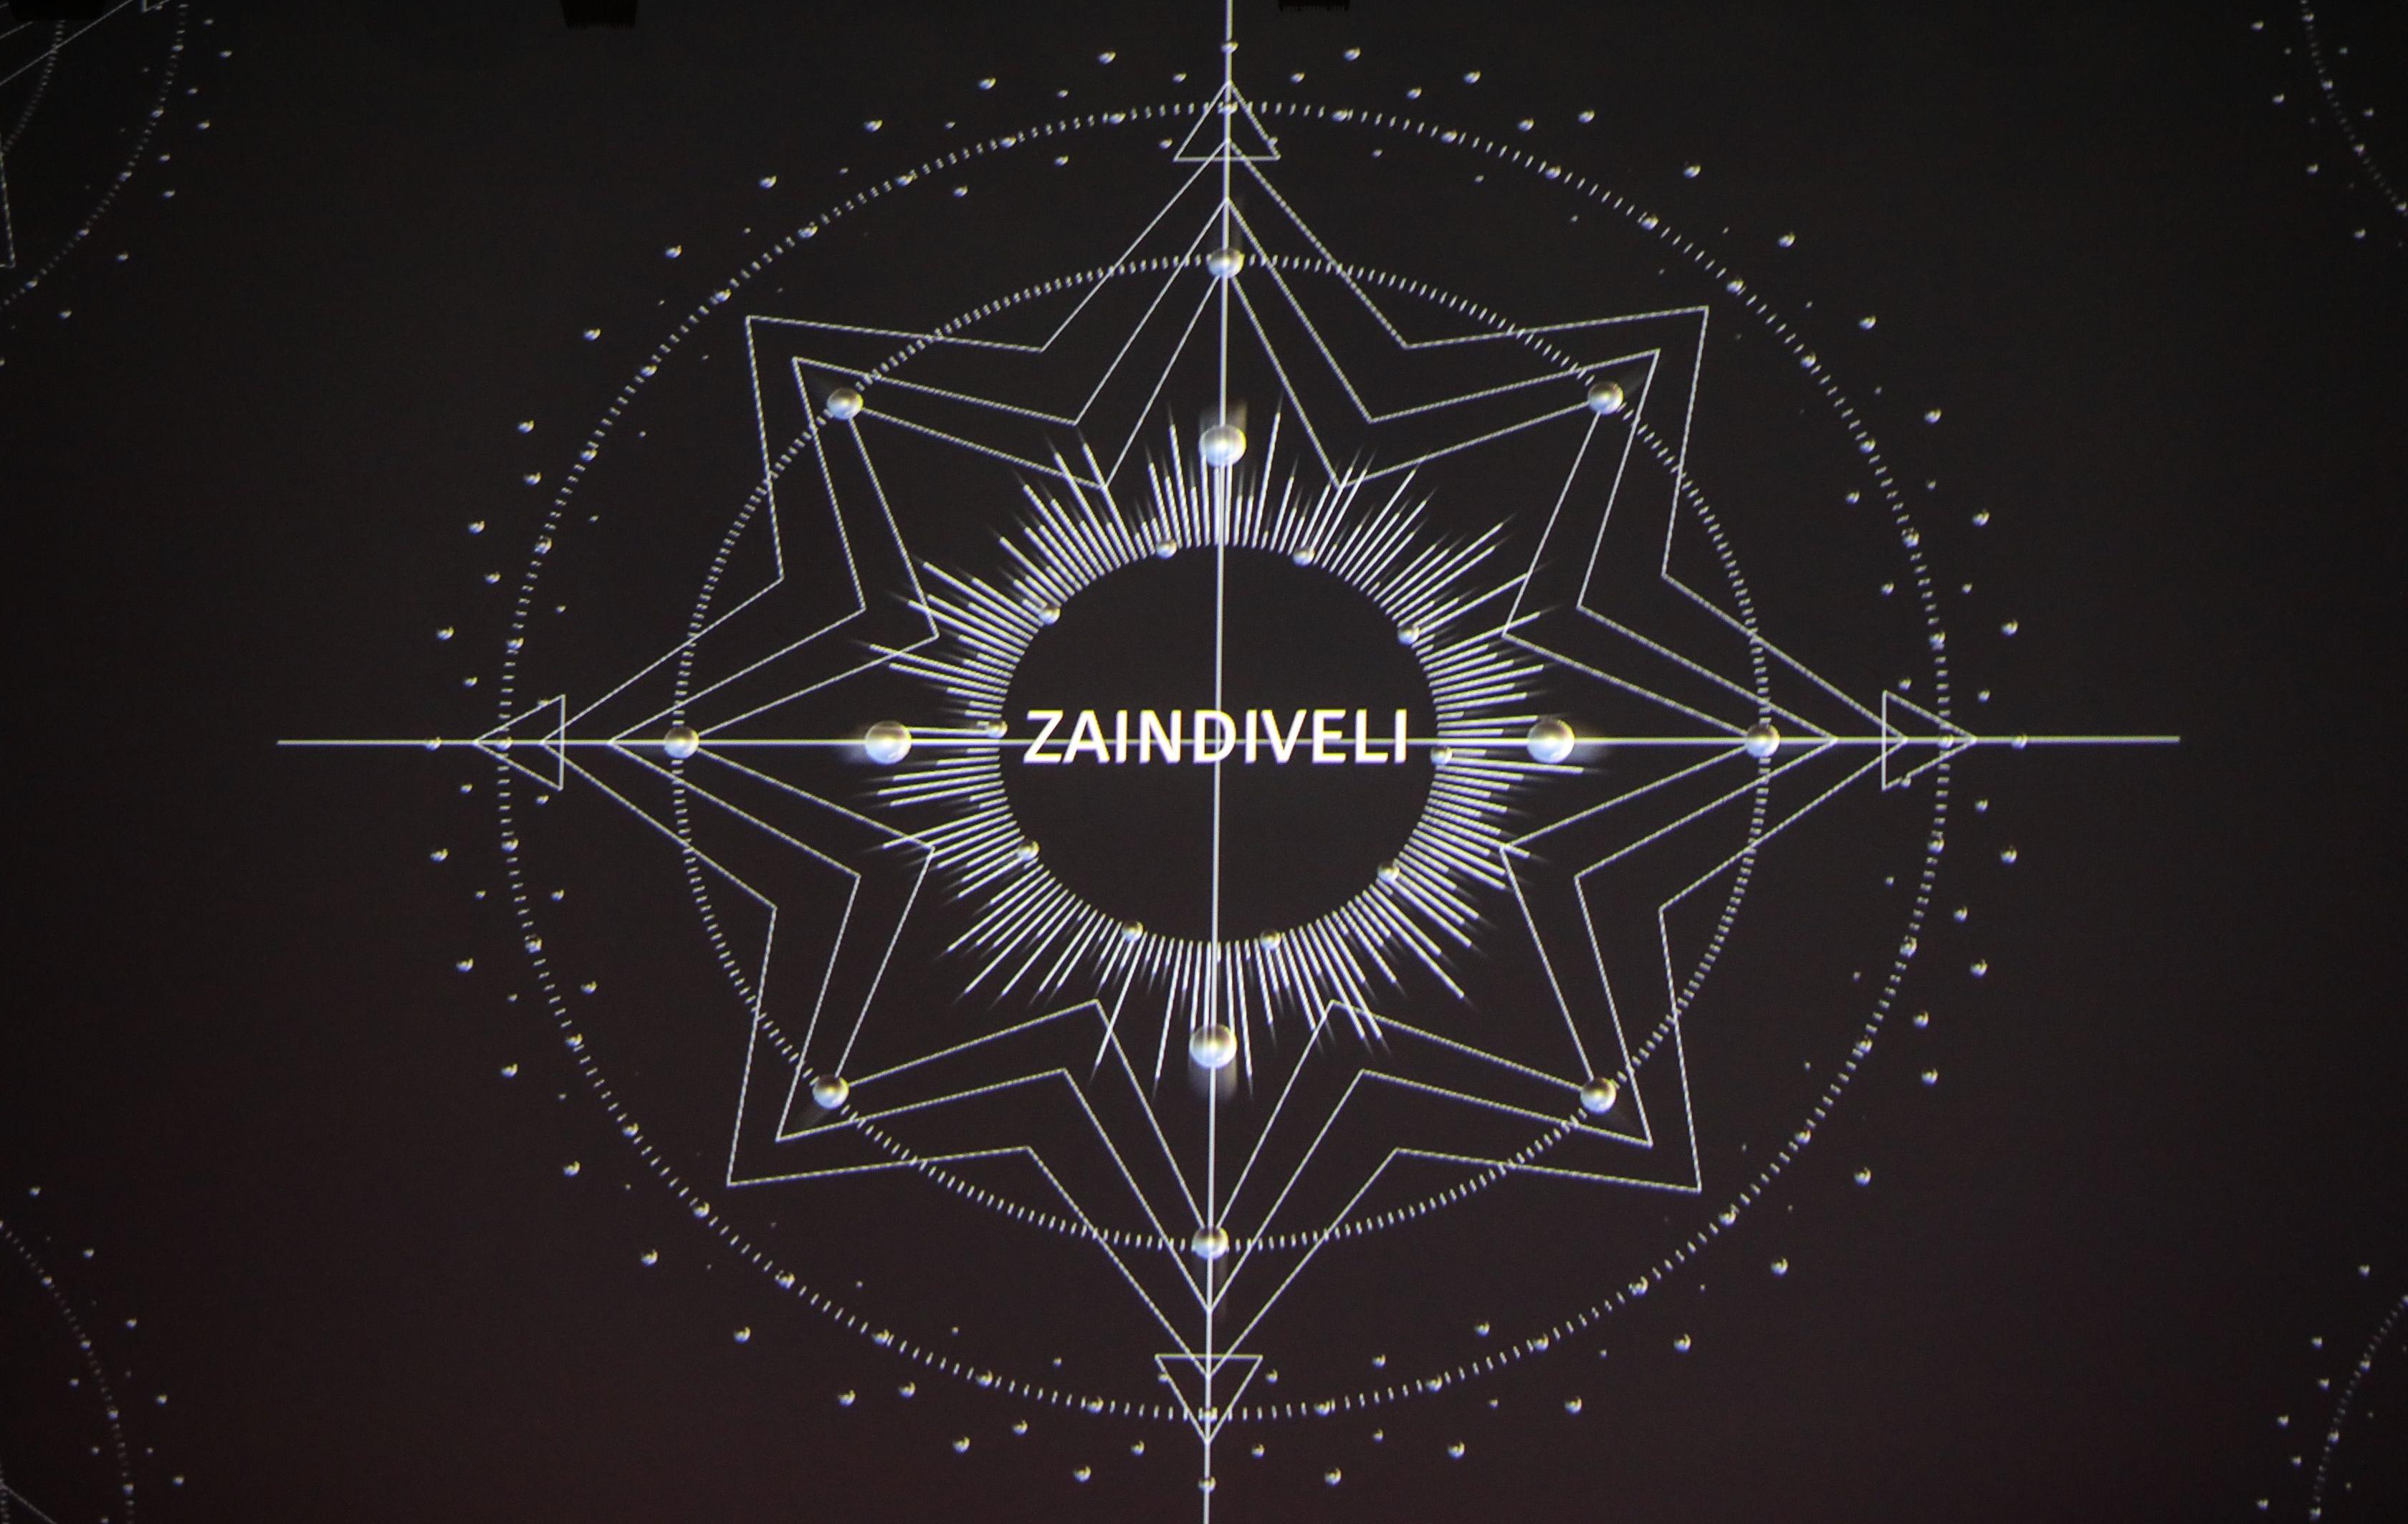 Electro-acoustic ambient project ZAINDIVELI